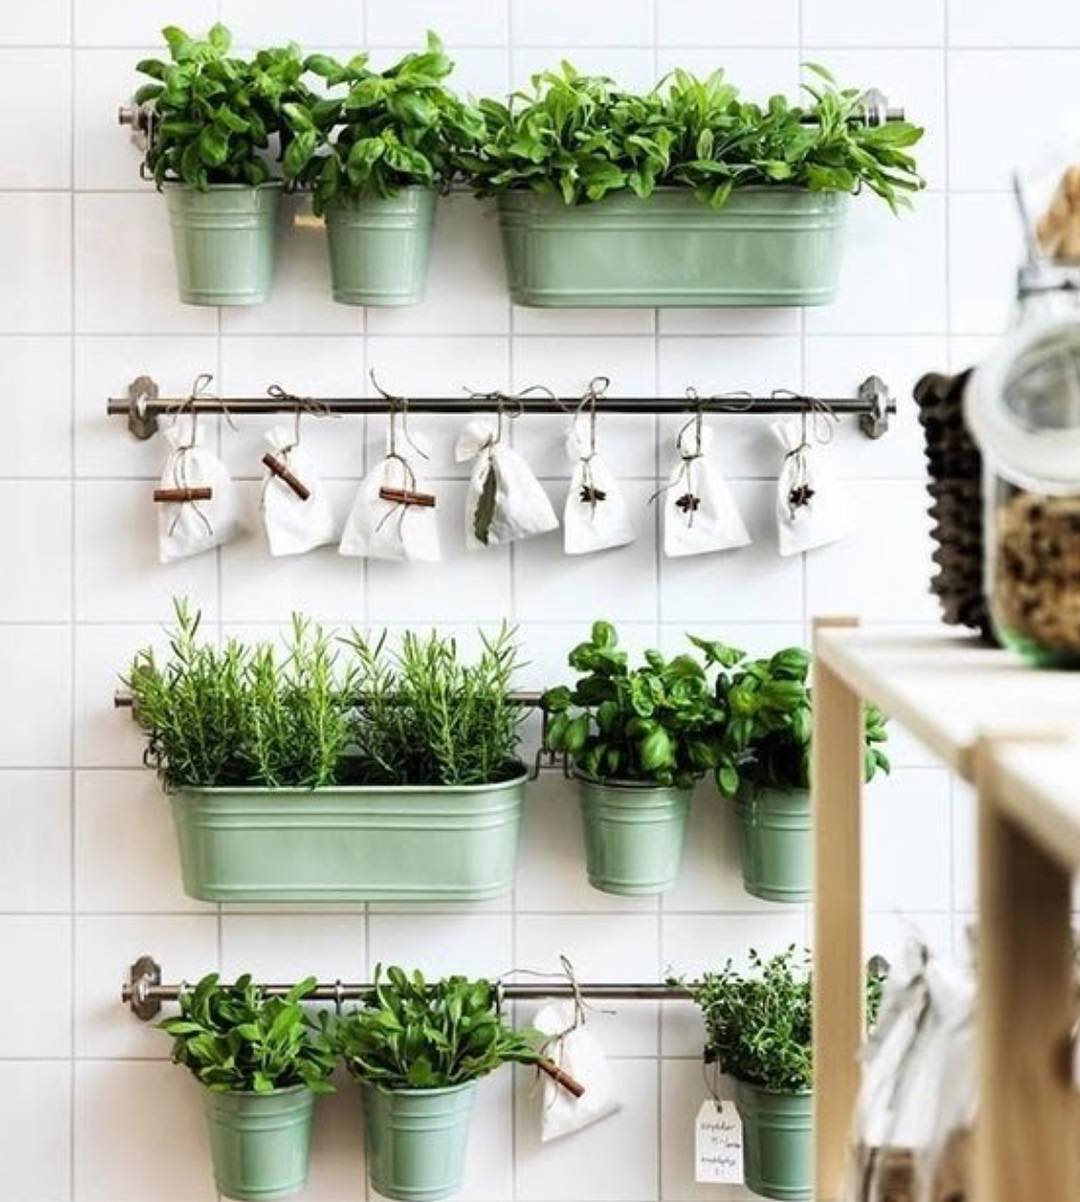 Herb garden on wall in kitchen. Photo by Instagram @say_no_to_waste_nz